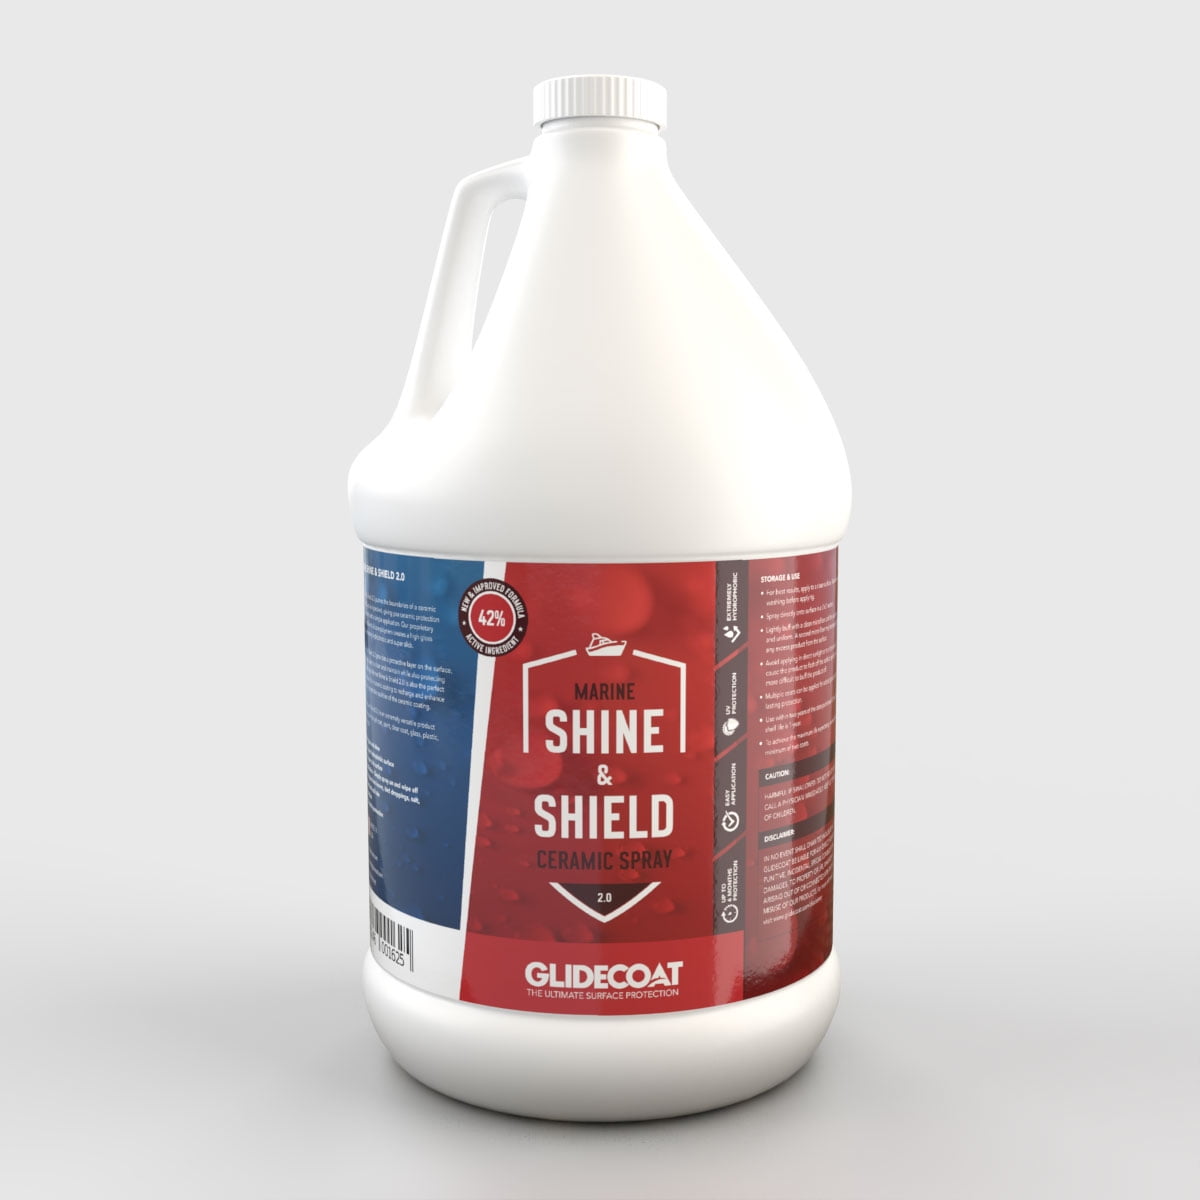 Glidecoat Marine Shine and Shield 2.0 Ceramic Spray Glidecoat